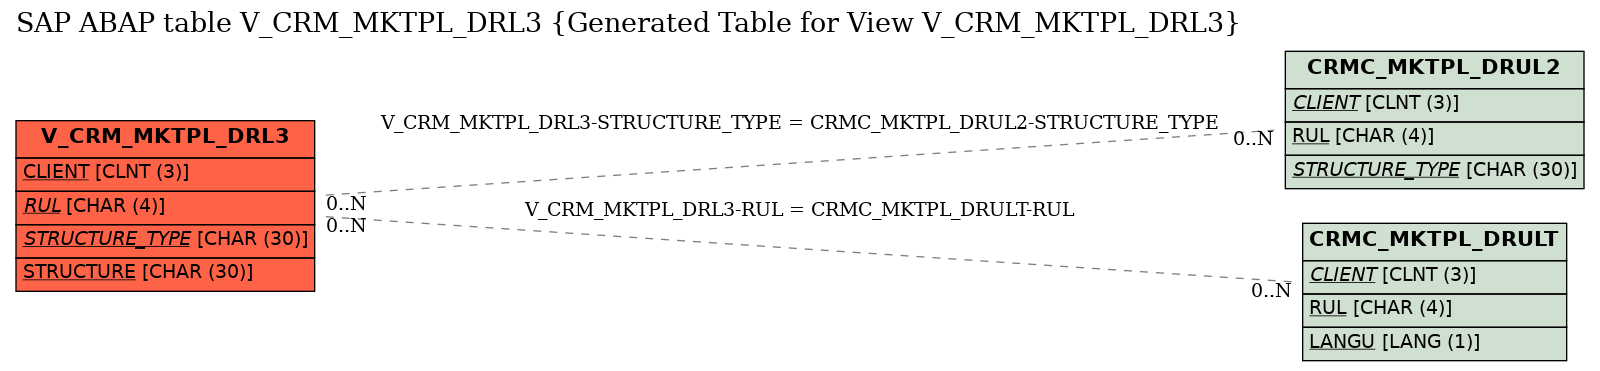 E-R Diagram for table V_CRM_MKTPL_DRL3 (Generated Table for View V_CRM_MKTPL_DRL3)